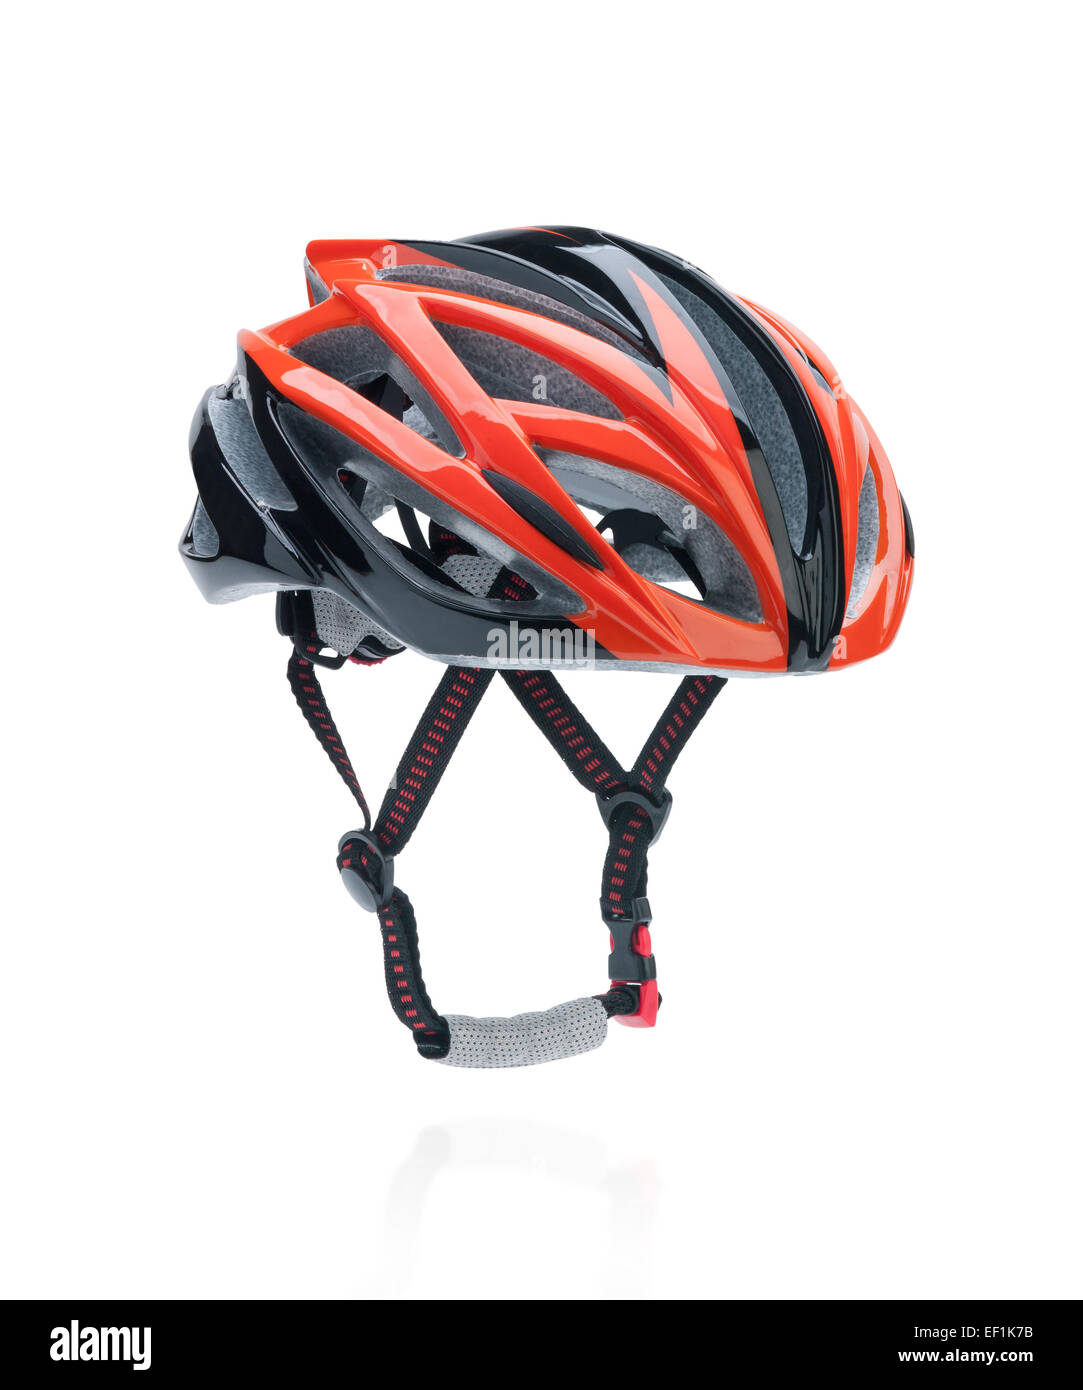 Bicycle mountain bike safety helmet isolated on white Stock Photo